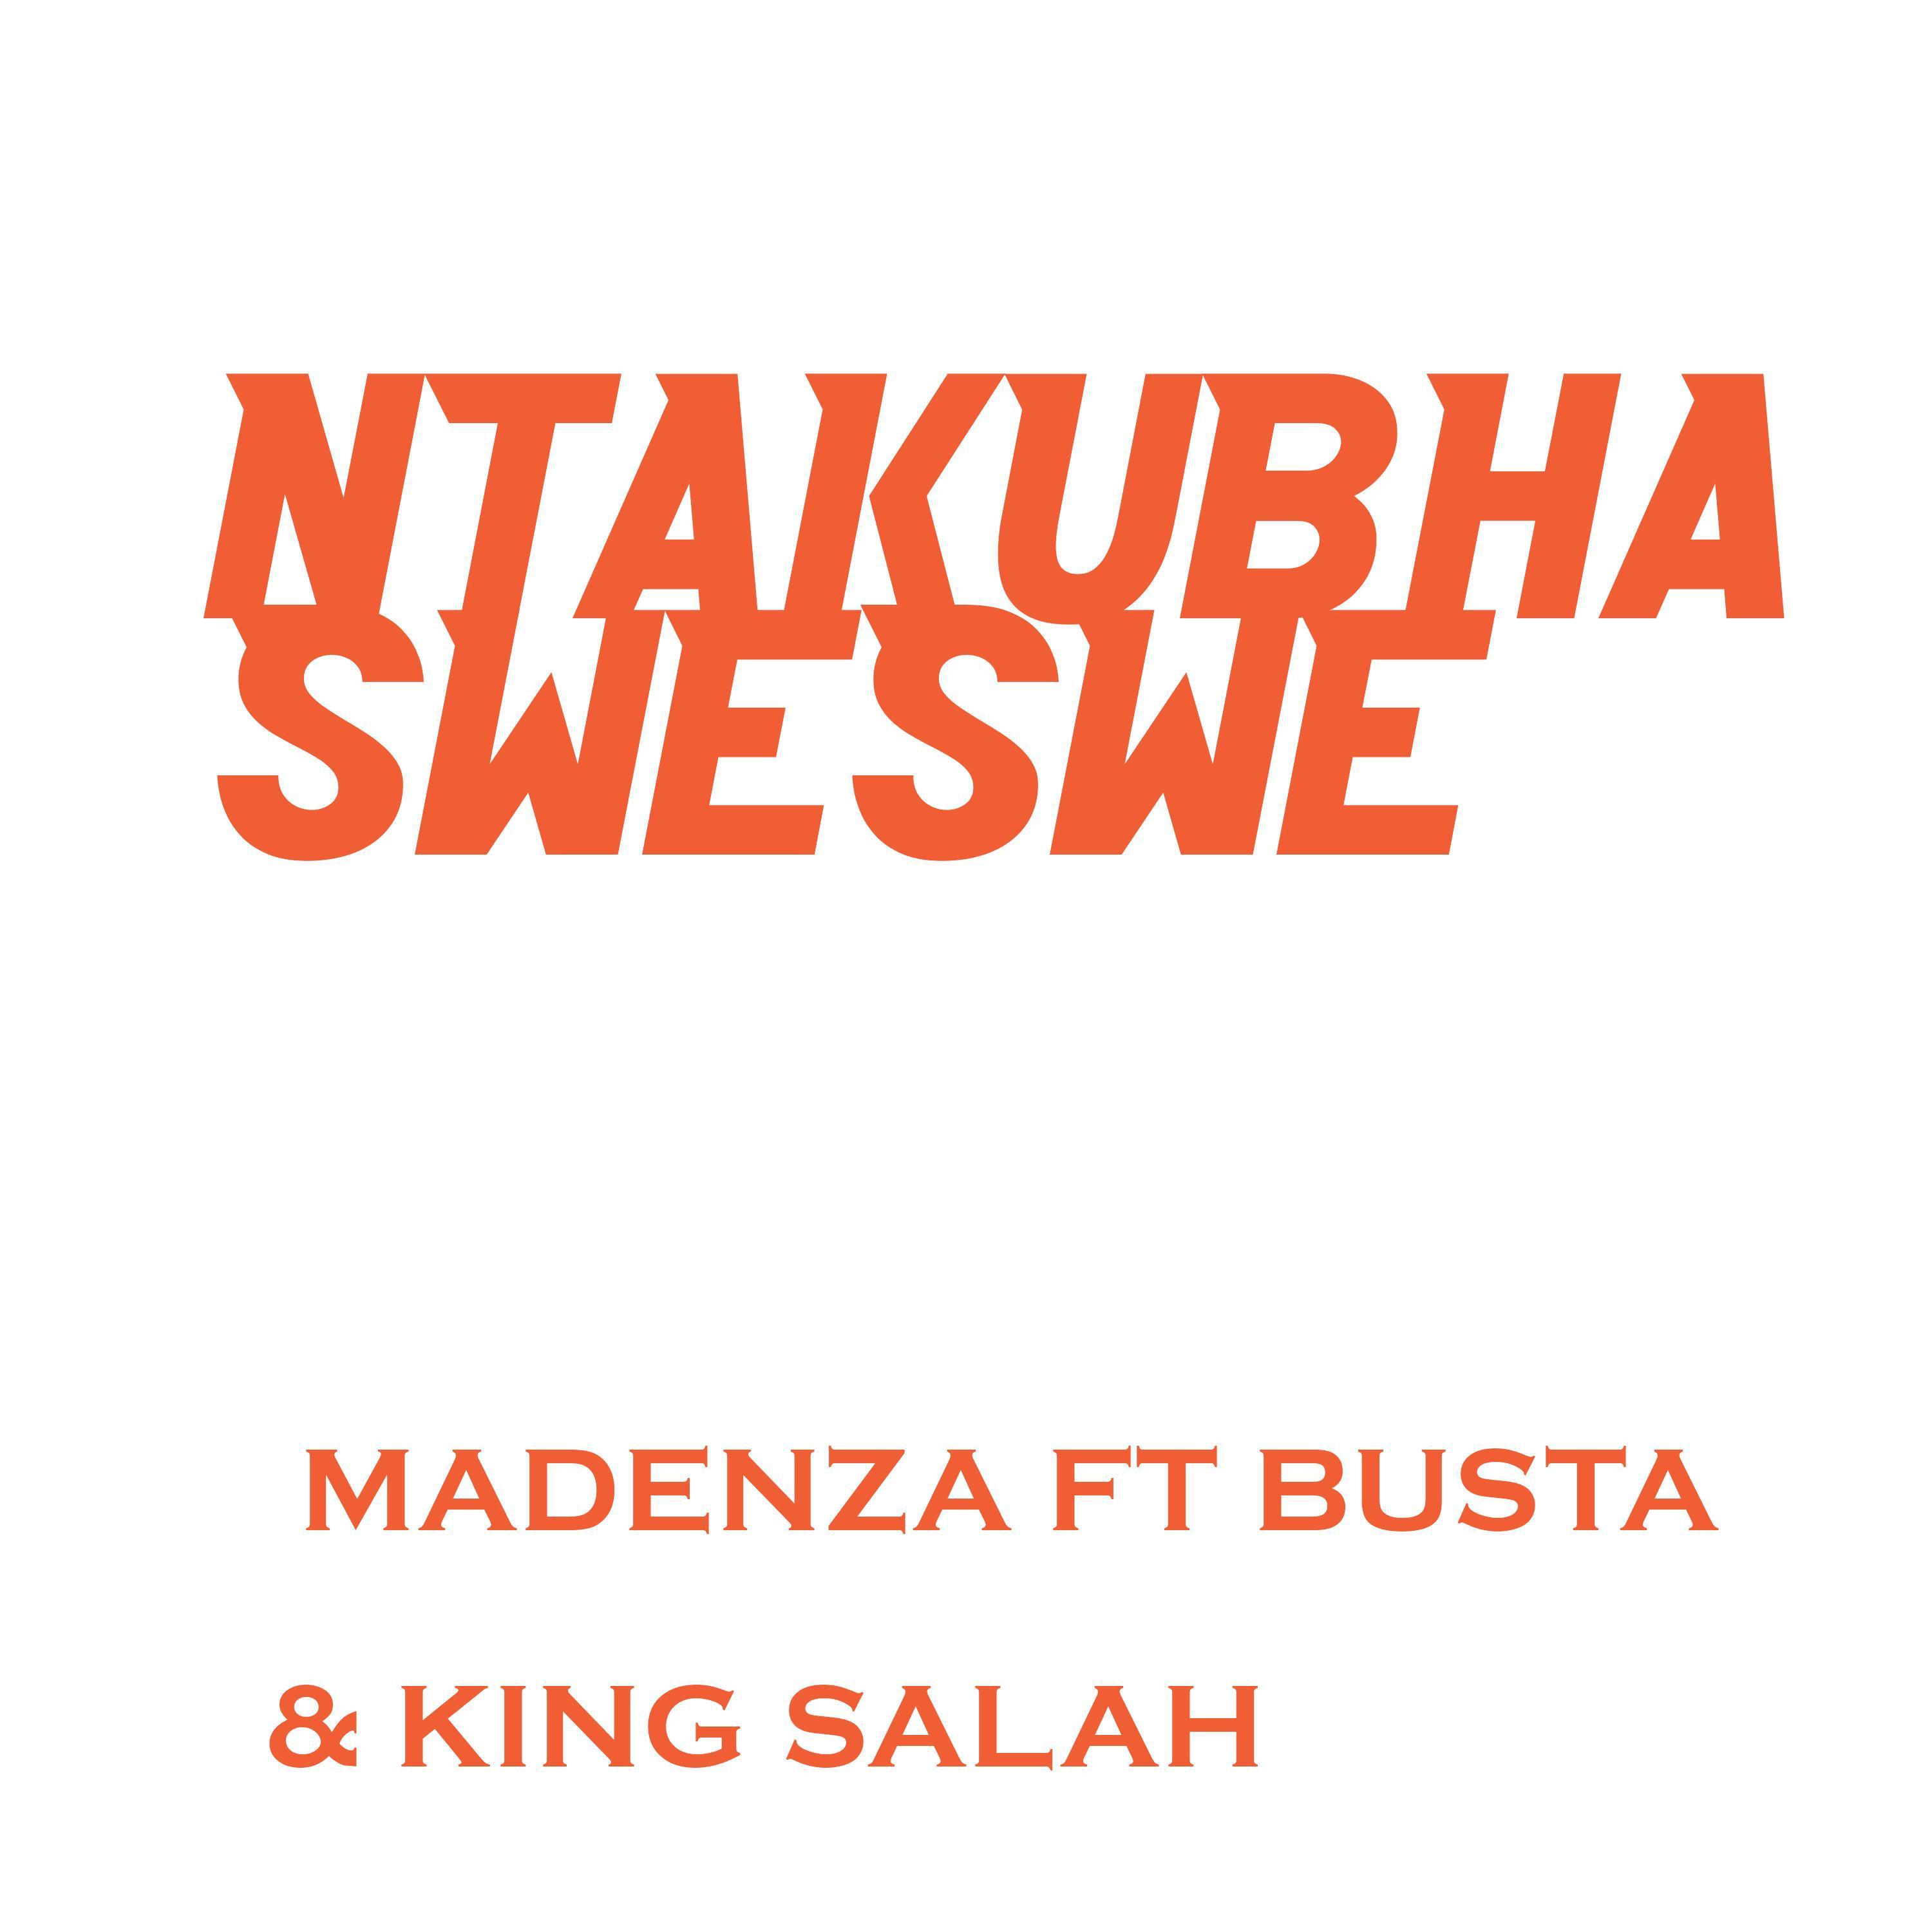 Madenza - Ntakubha Sweswe